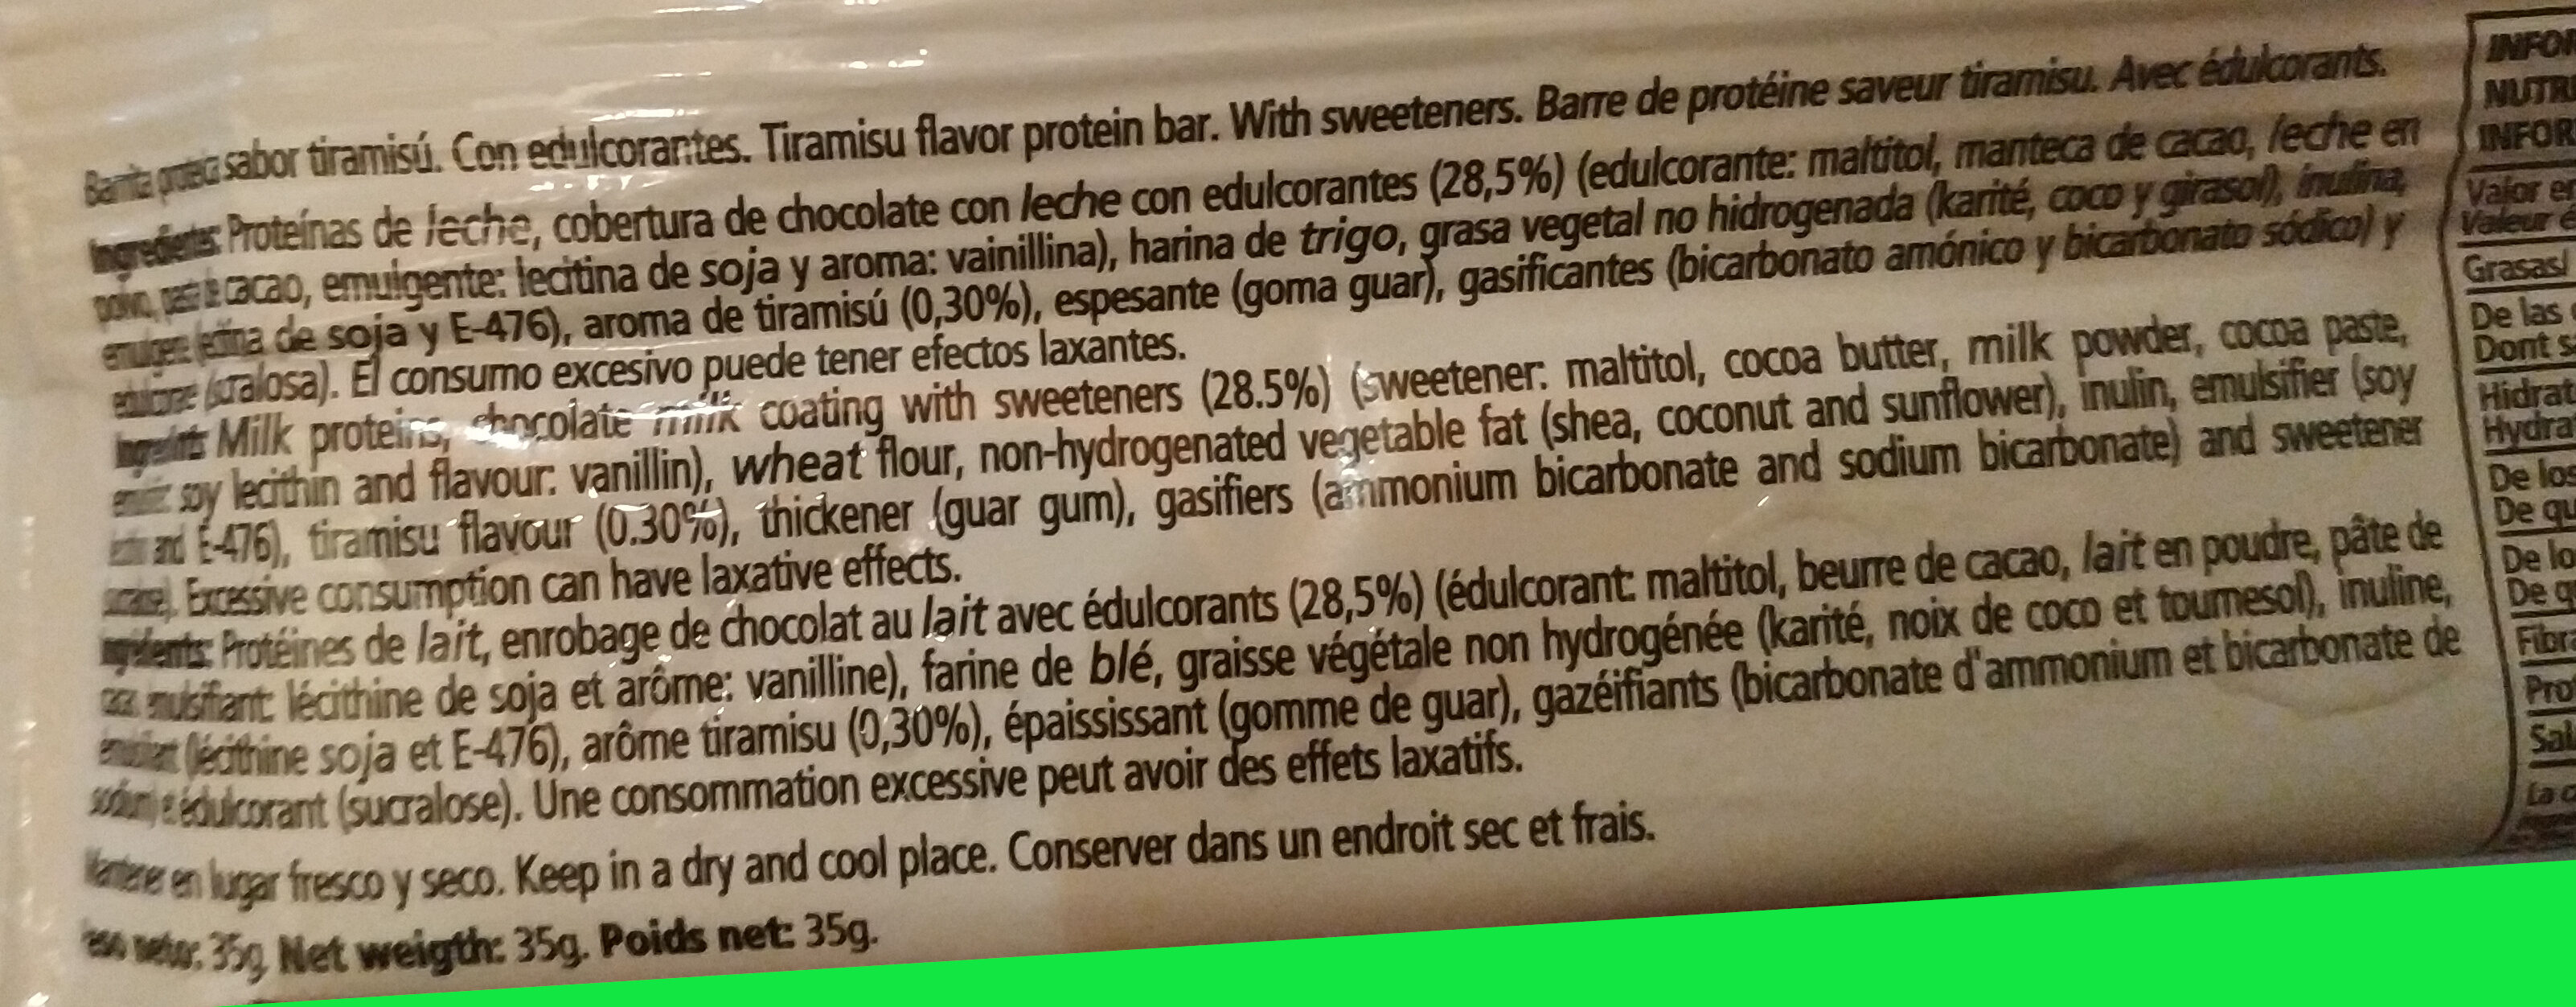 Whey Protein Meal - Tiramisu - Ingredients - es